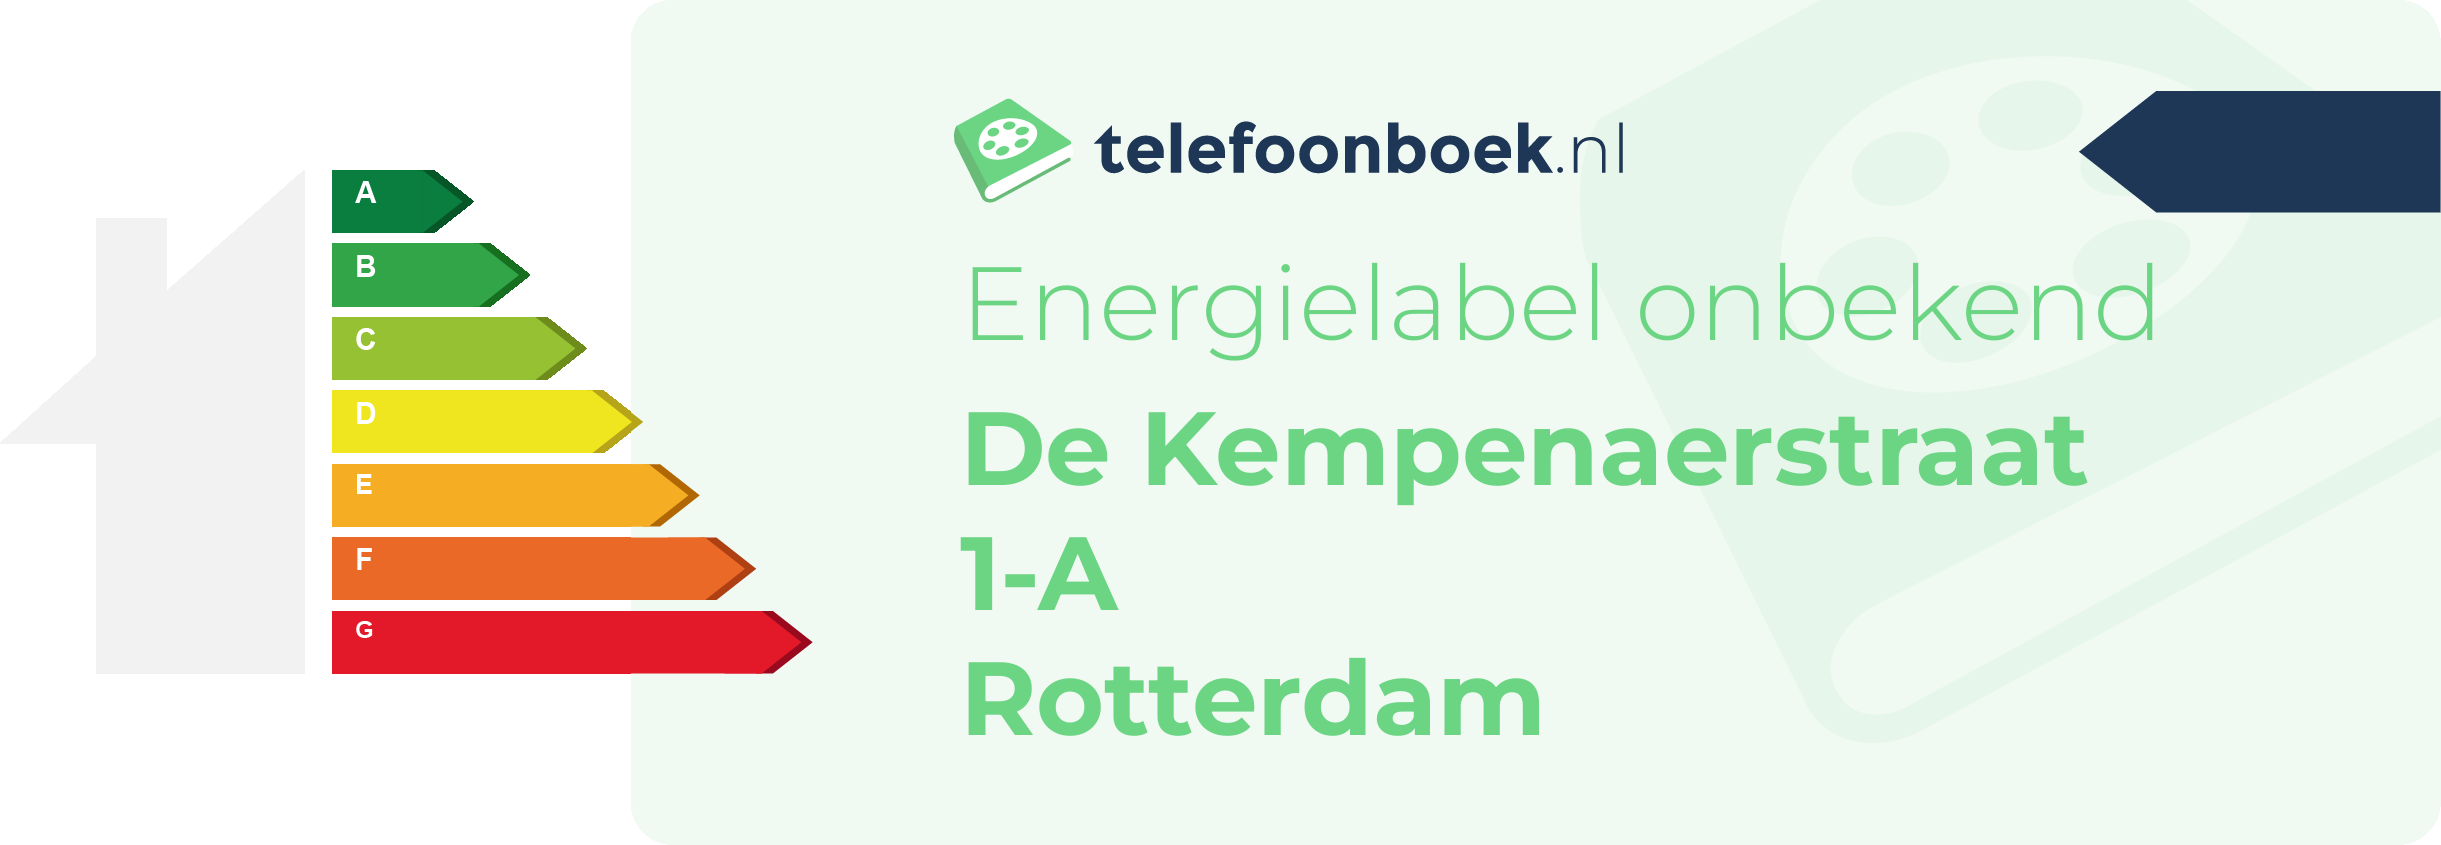 Energielabel De Kempenaerstraat 1-A Rotterdam